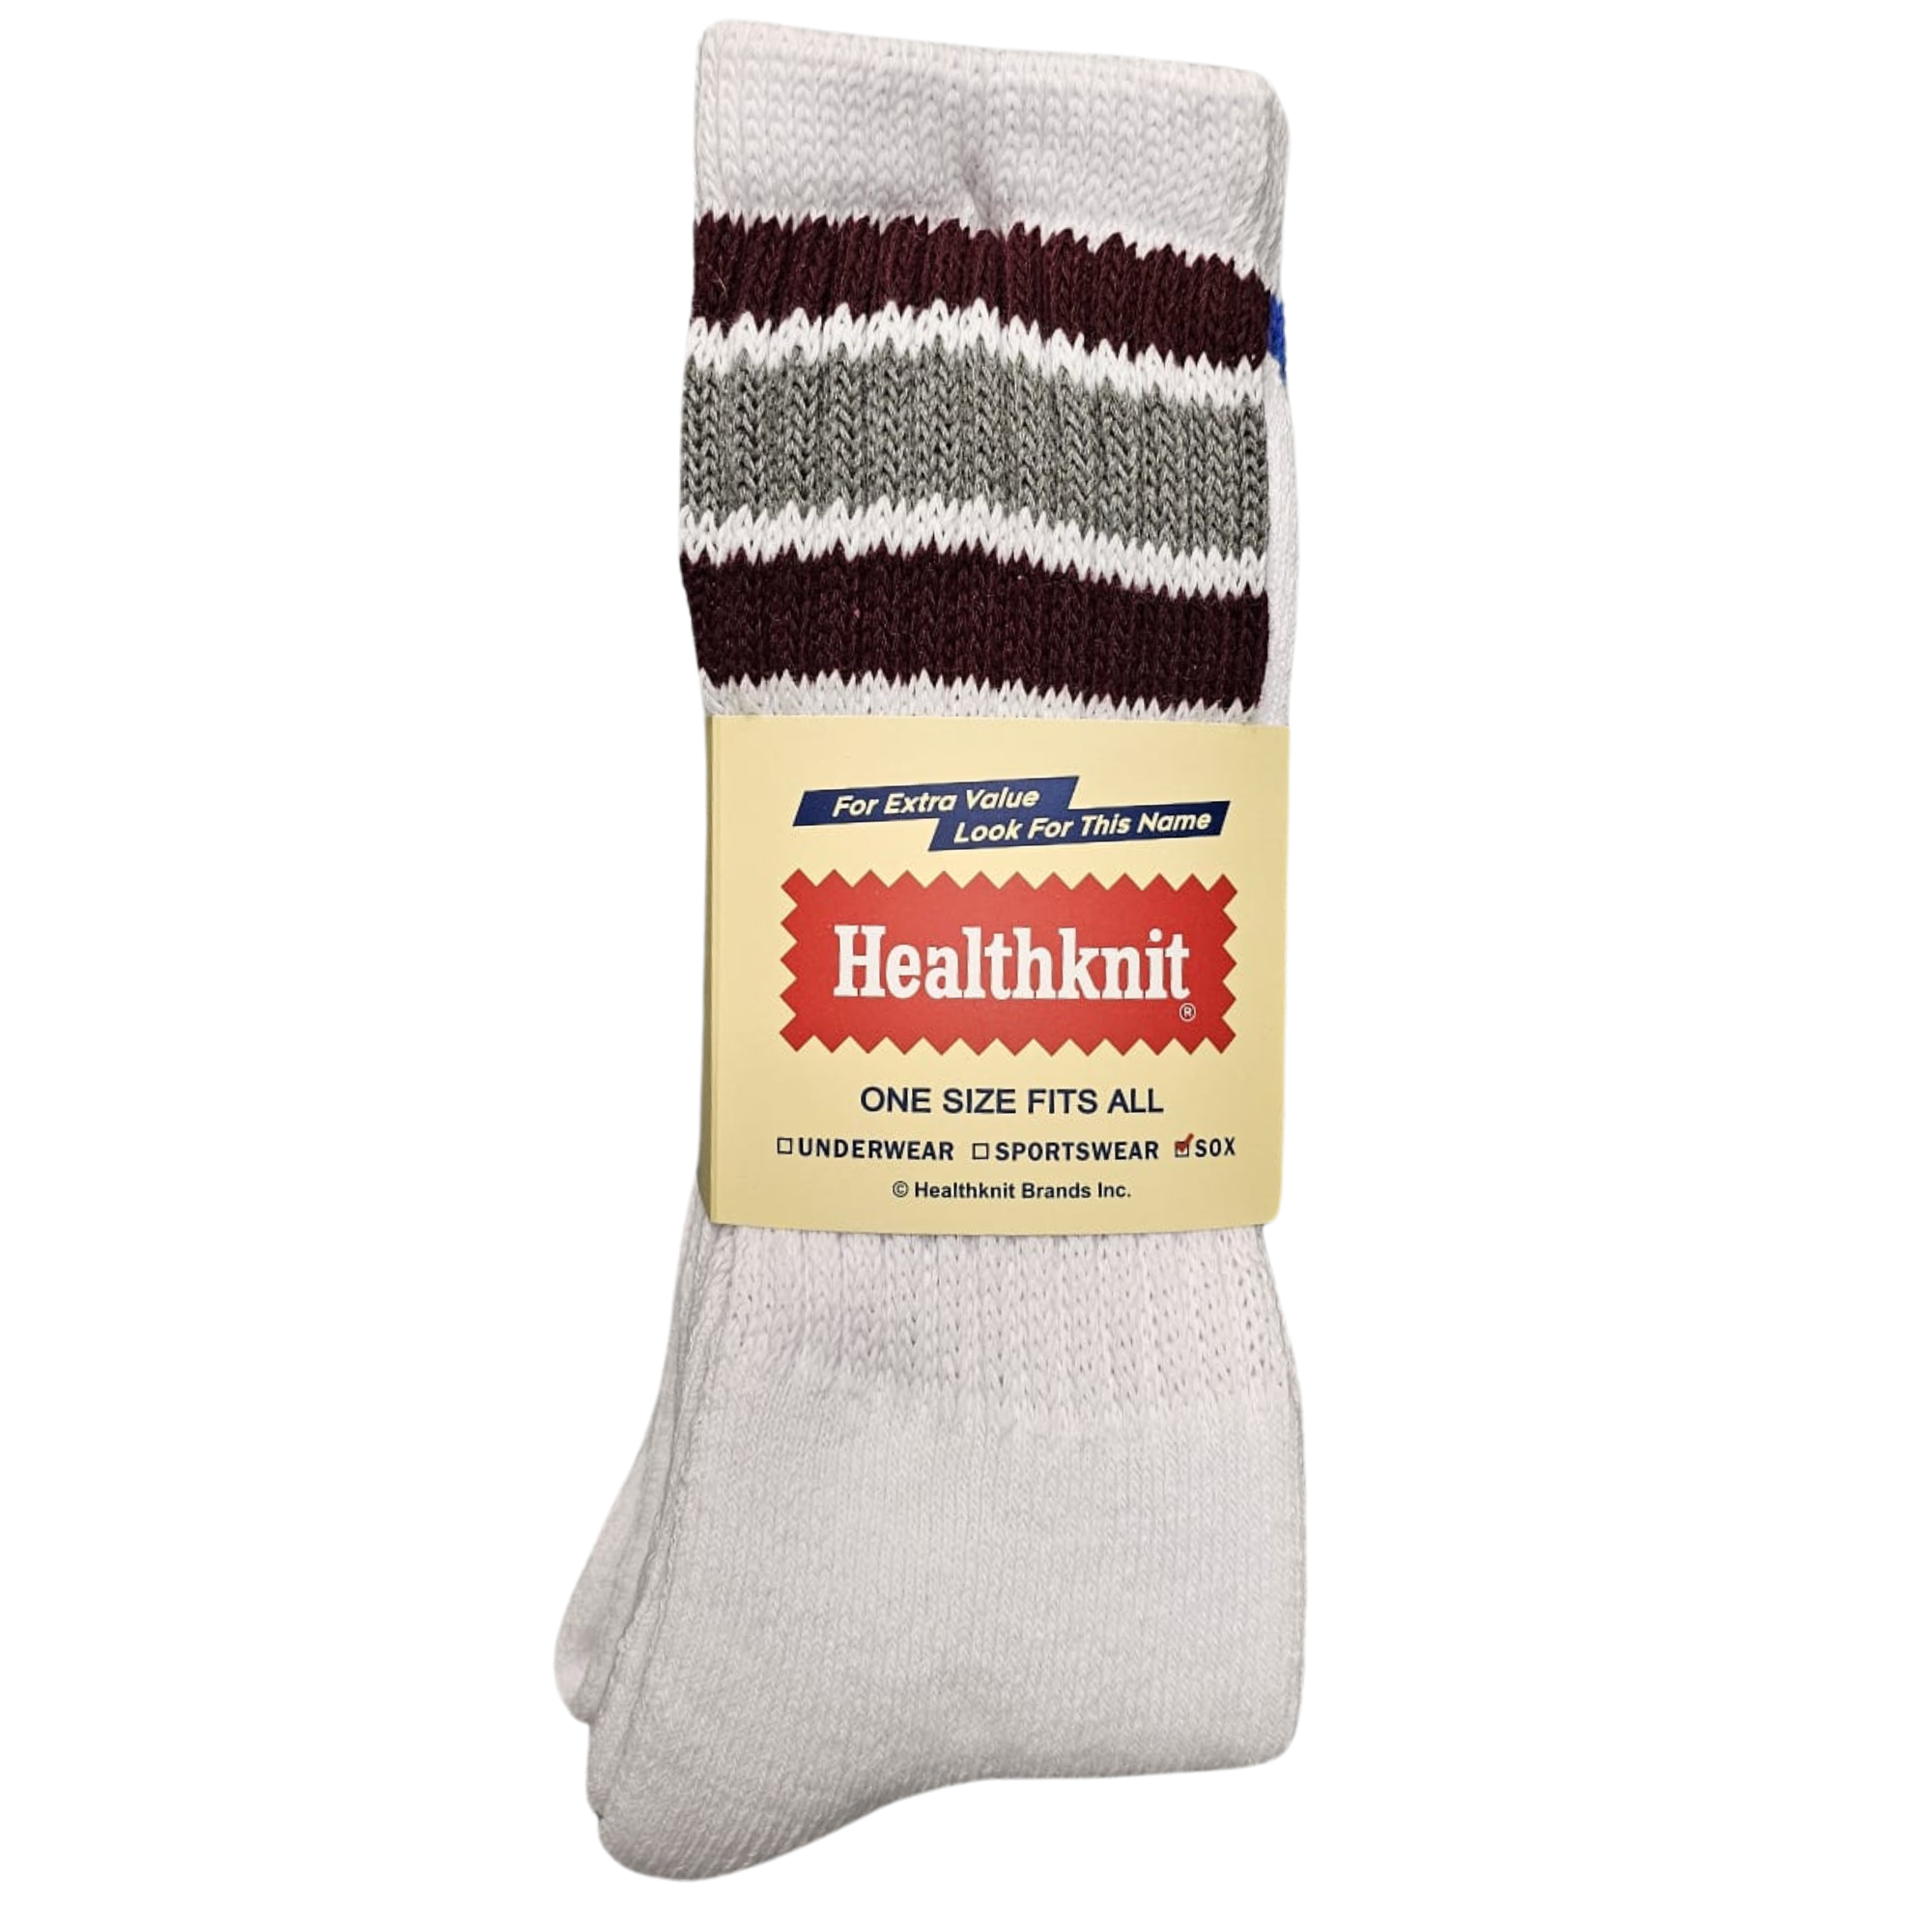 Healthknit Socks 3 Pack in White and Multi